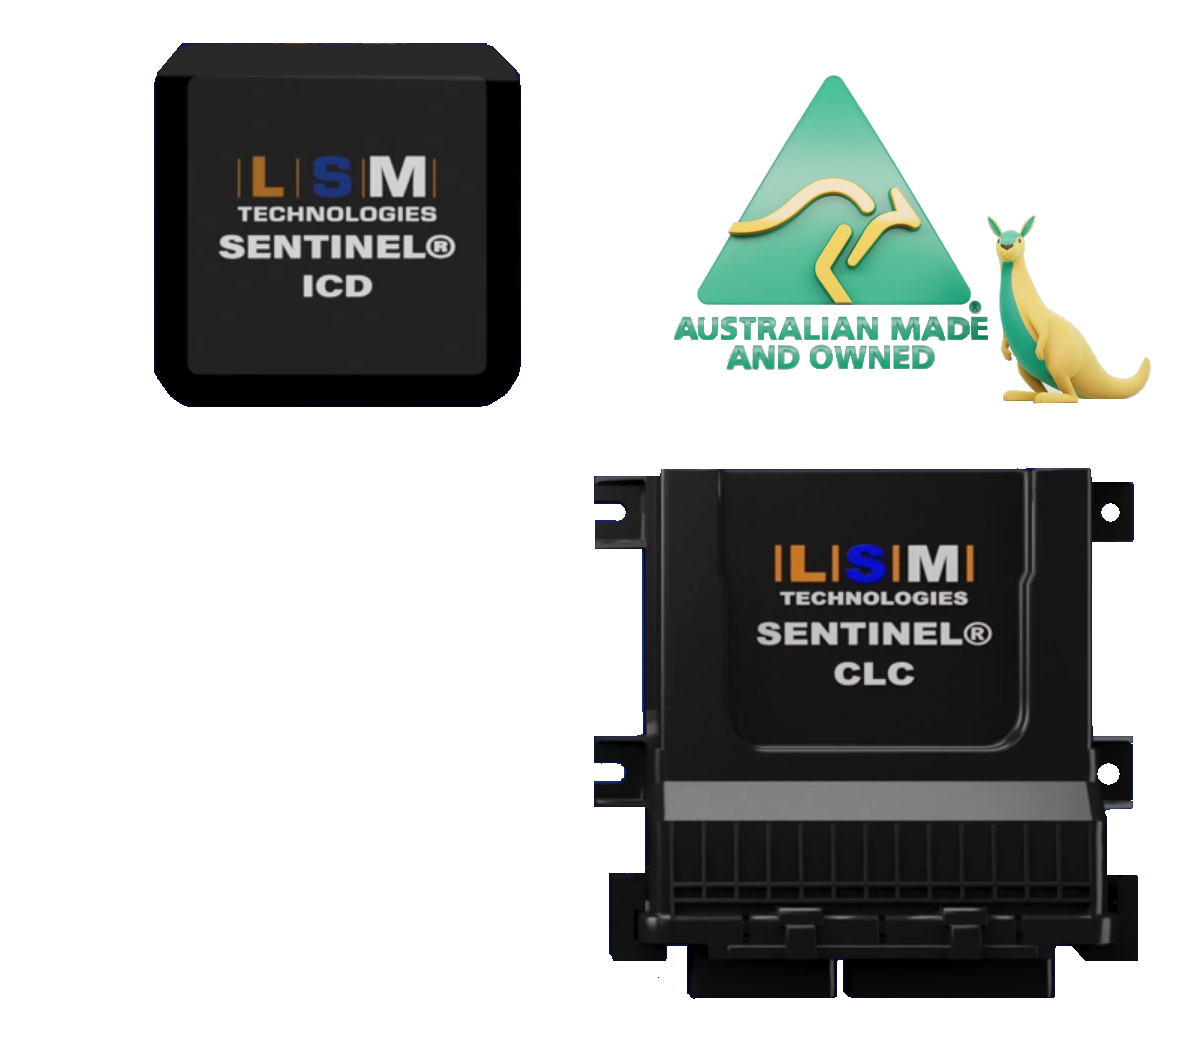 LSM Sentinel® VSS (pat.pend) Vehicle Safety System- Central Logics Controller + In Cabin Display